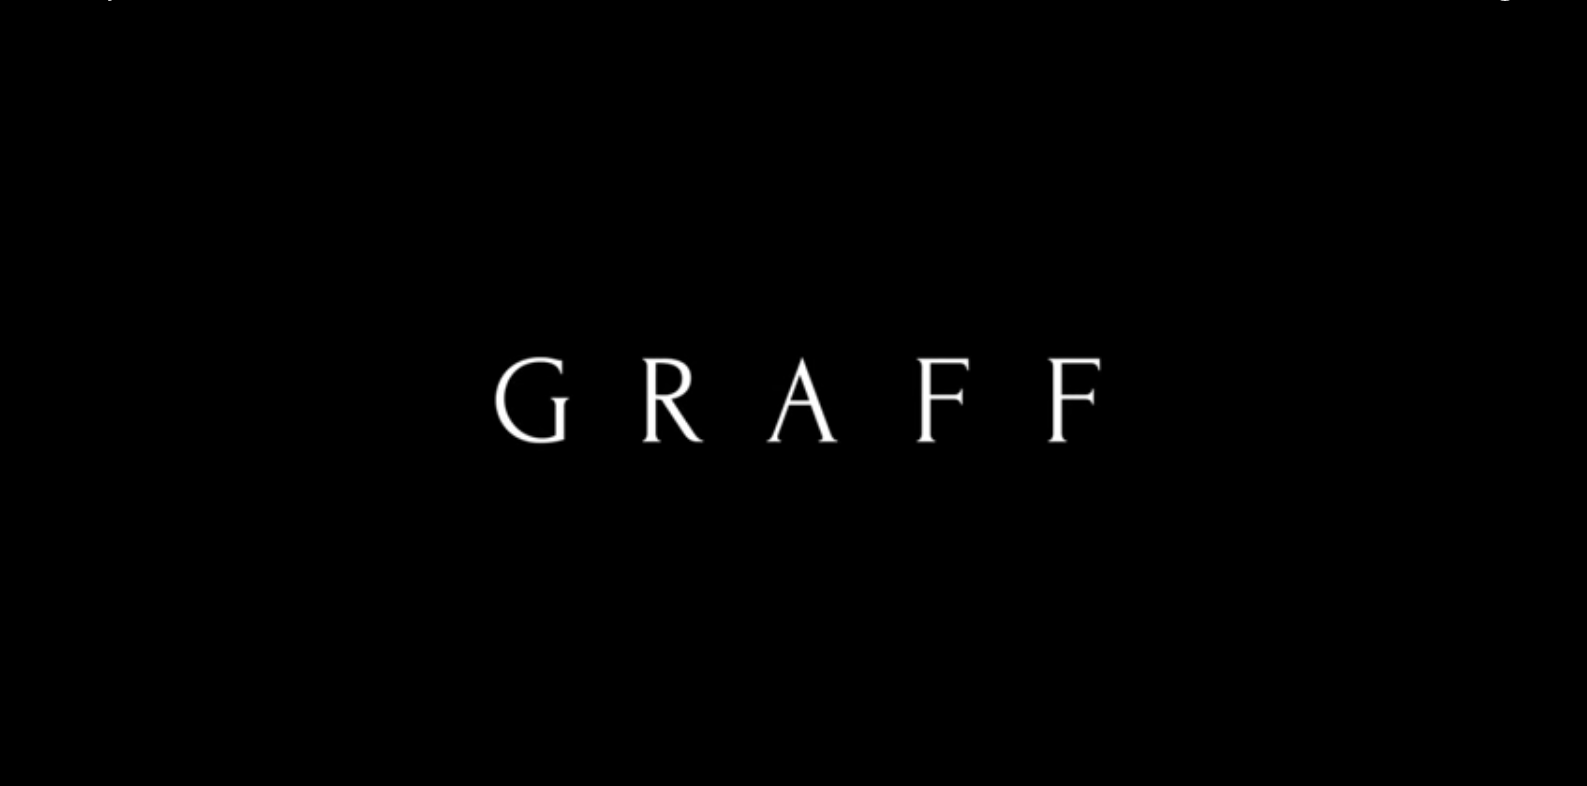 Graff Logo - Graff Diamond - Orama - Video Marketing for B2B and Finance